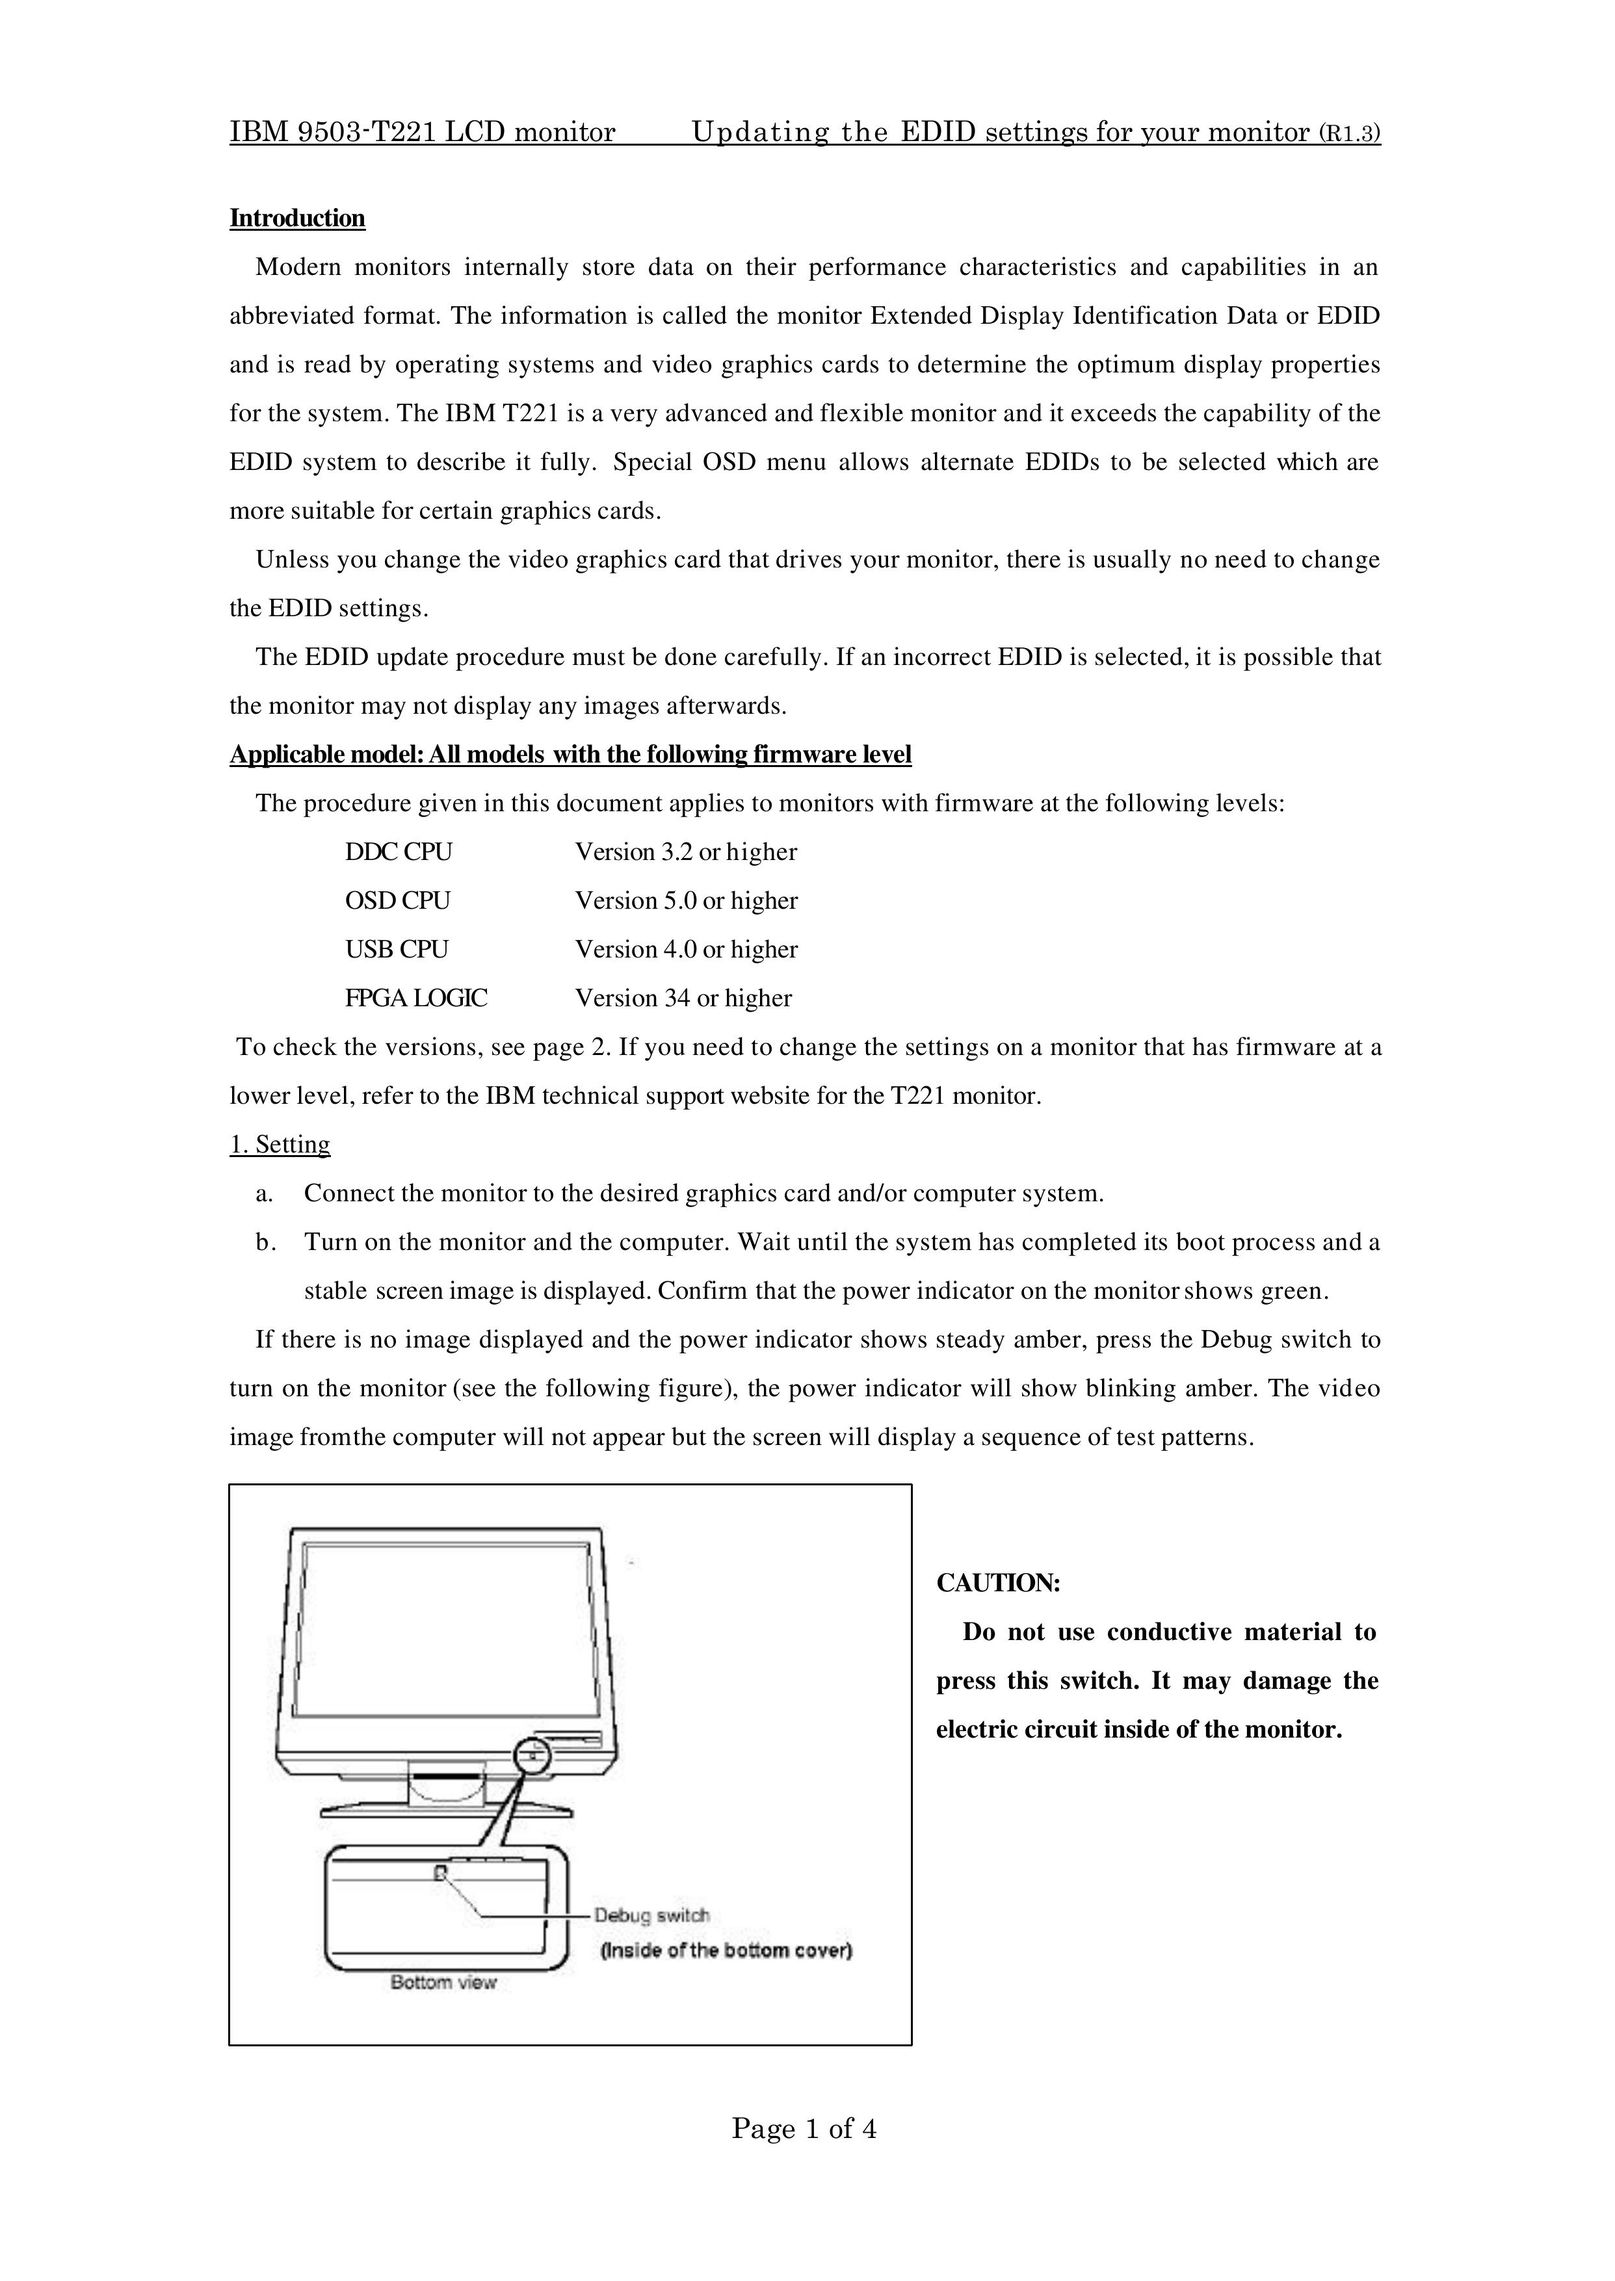 IBM DG1 Computer Monitor User Manual